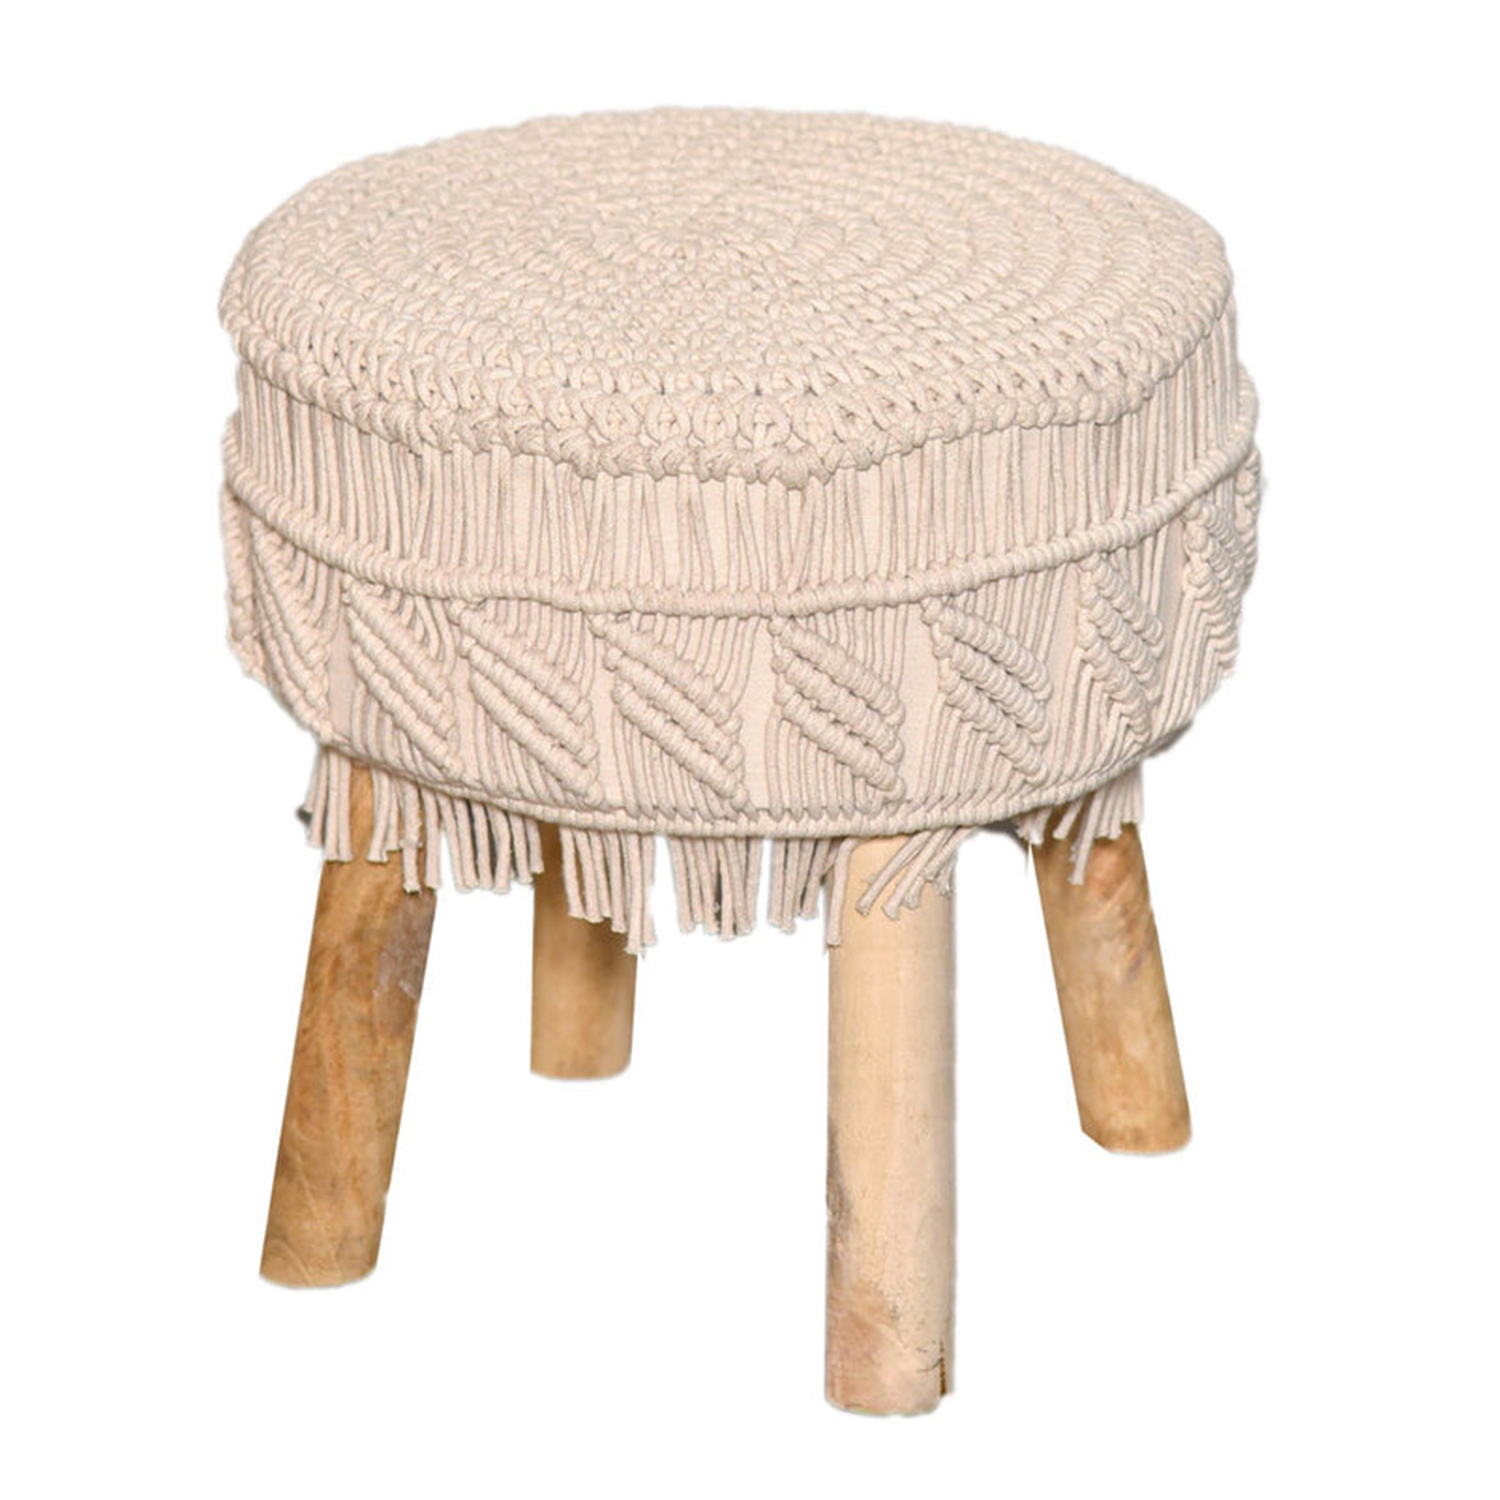 bohemian handmade furniture macrame ottoman stools manufacturer, Supplier and exporter